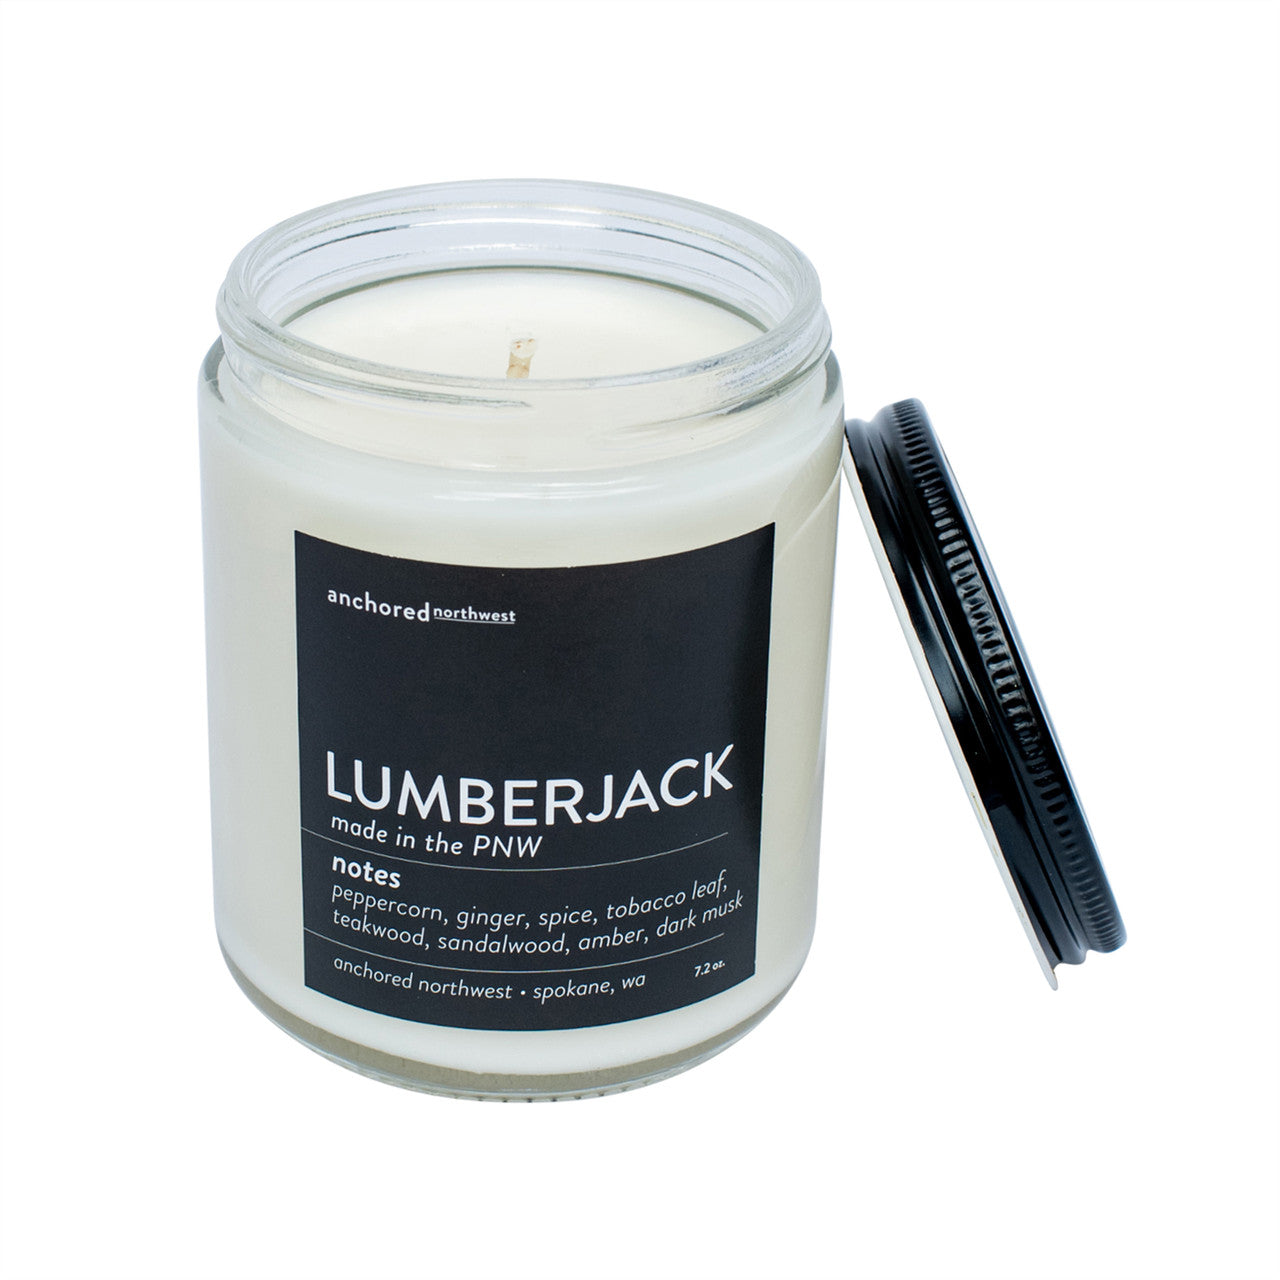 Lumberjack Classic Tumbler Candle